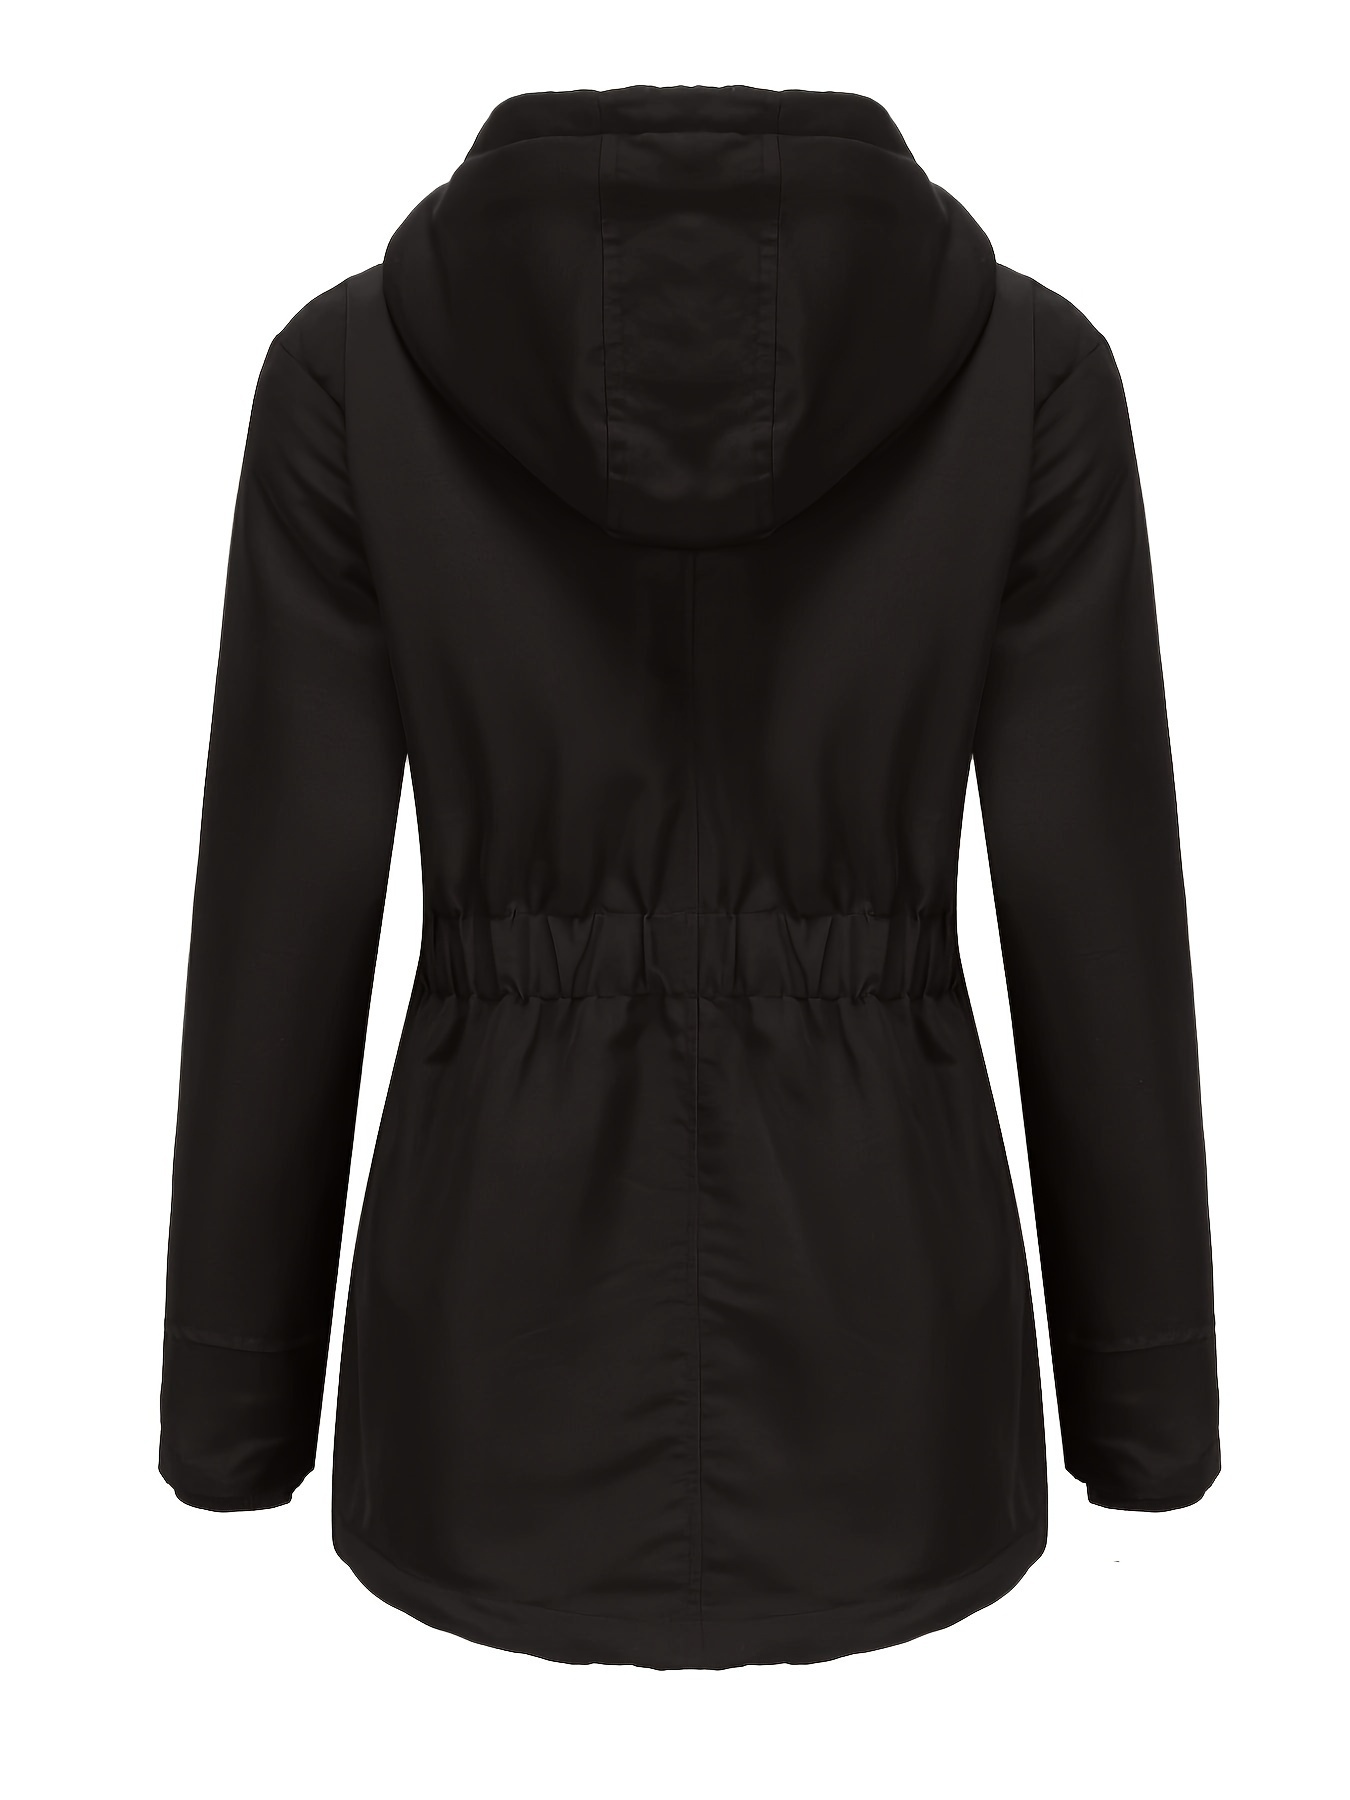 Black Jackets & Coats for Women, Shop All Outerwear